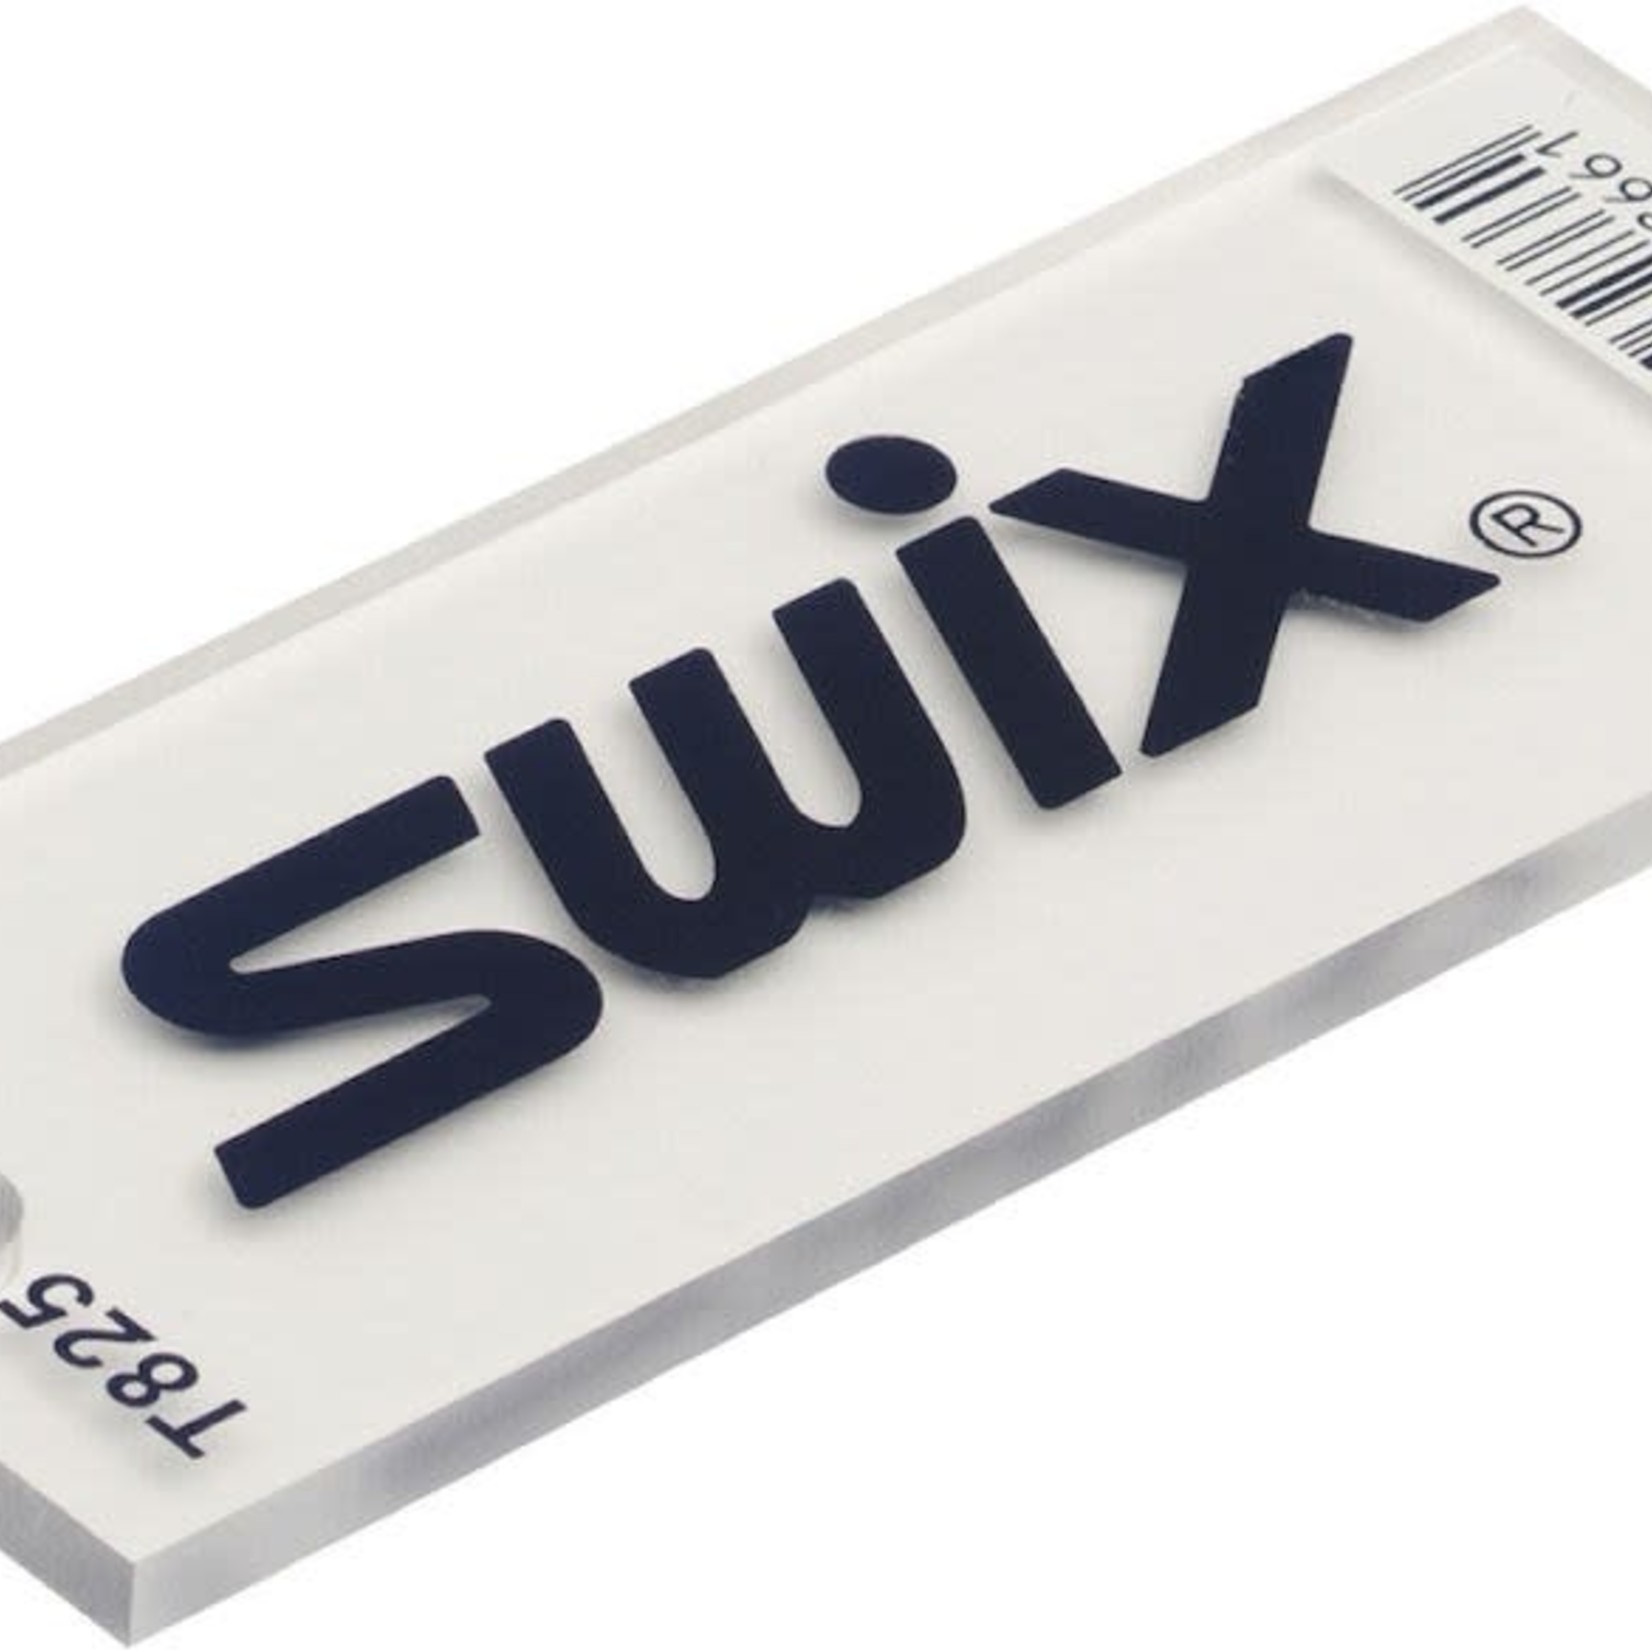 Swix SWIX, 5mm Plexi Scraper